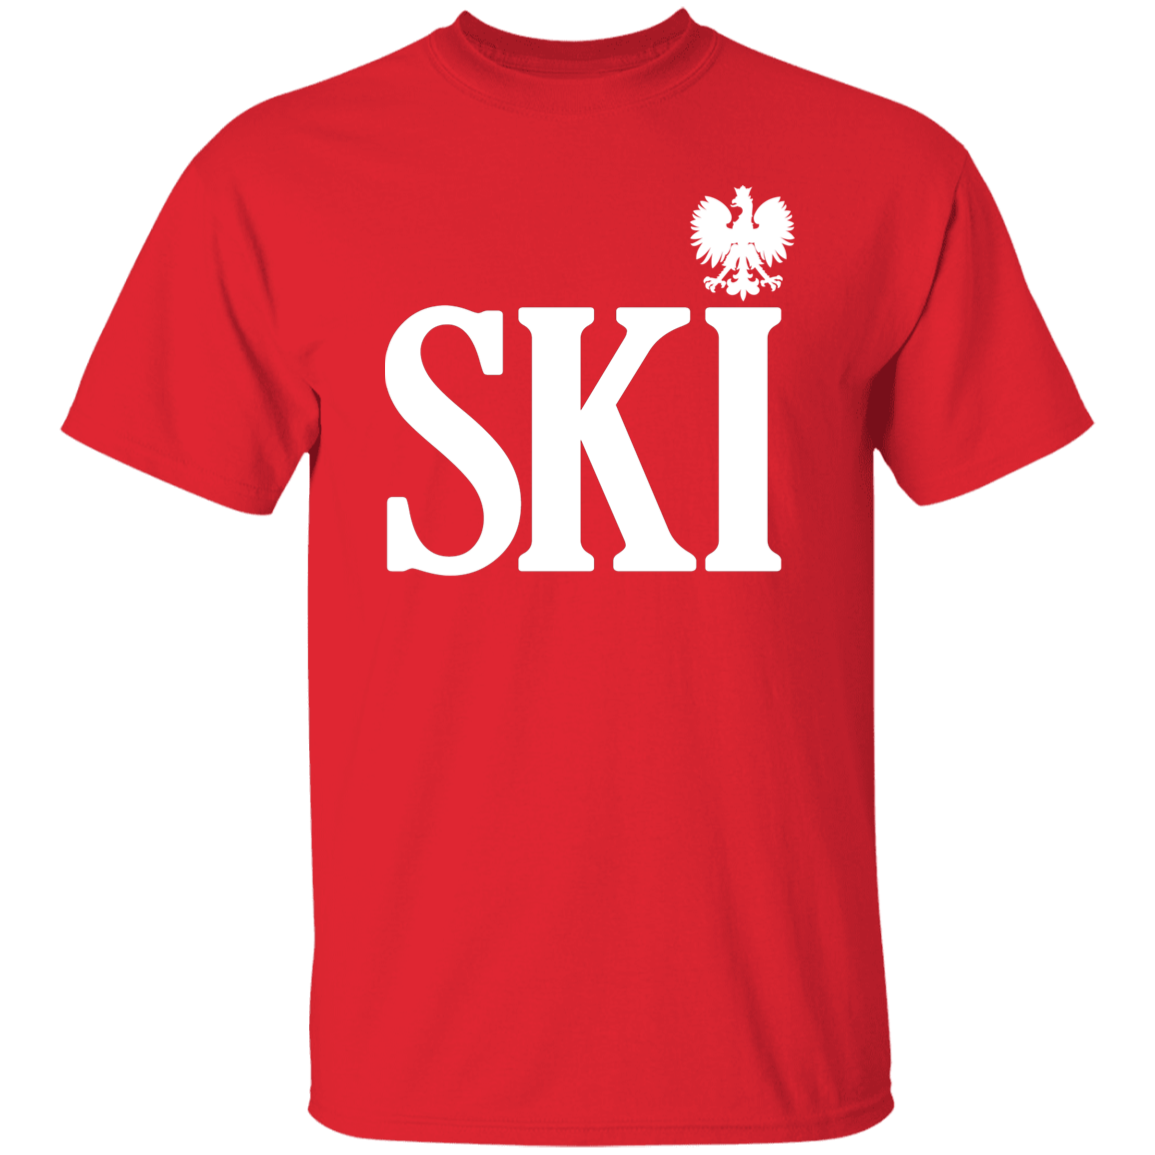 SKI Polish Surname Ending Apparel CustomCat G500 5.3 oz. T-Shirt Red S